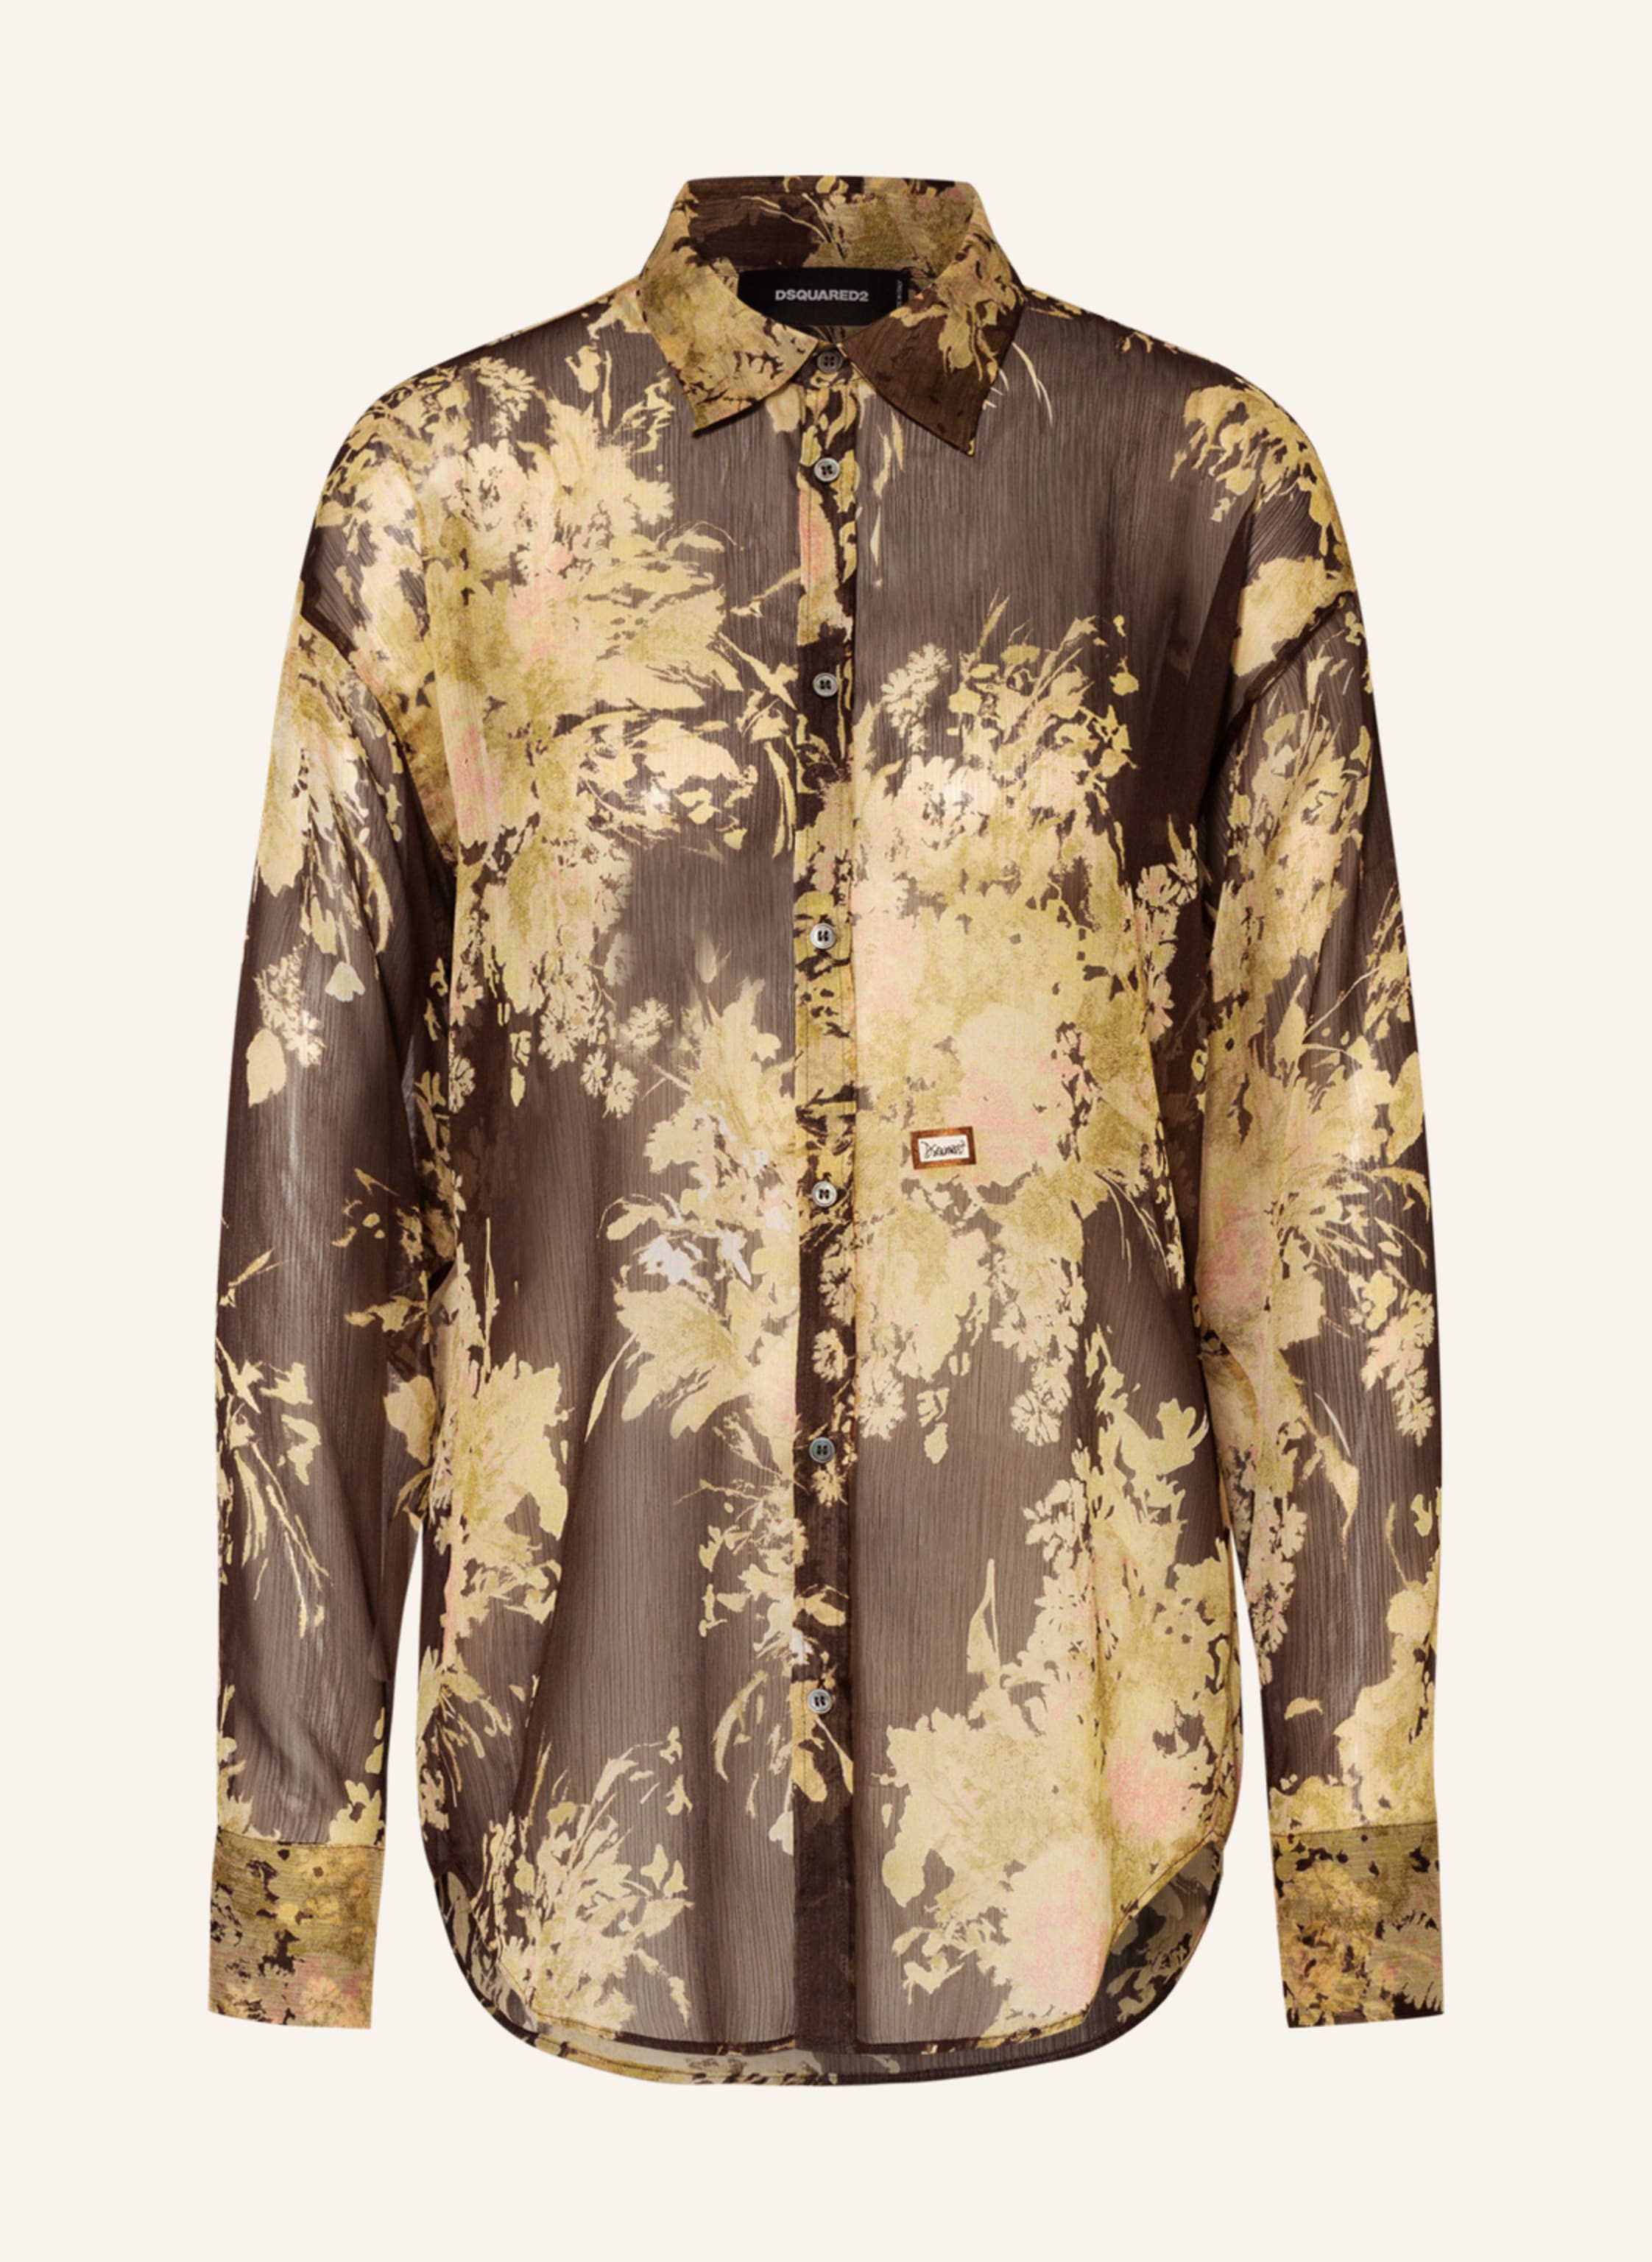 Landelijk Tante compromis DSQUARED2 Shirt blouse in khaki/ beige/ light brown | Breuninger